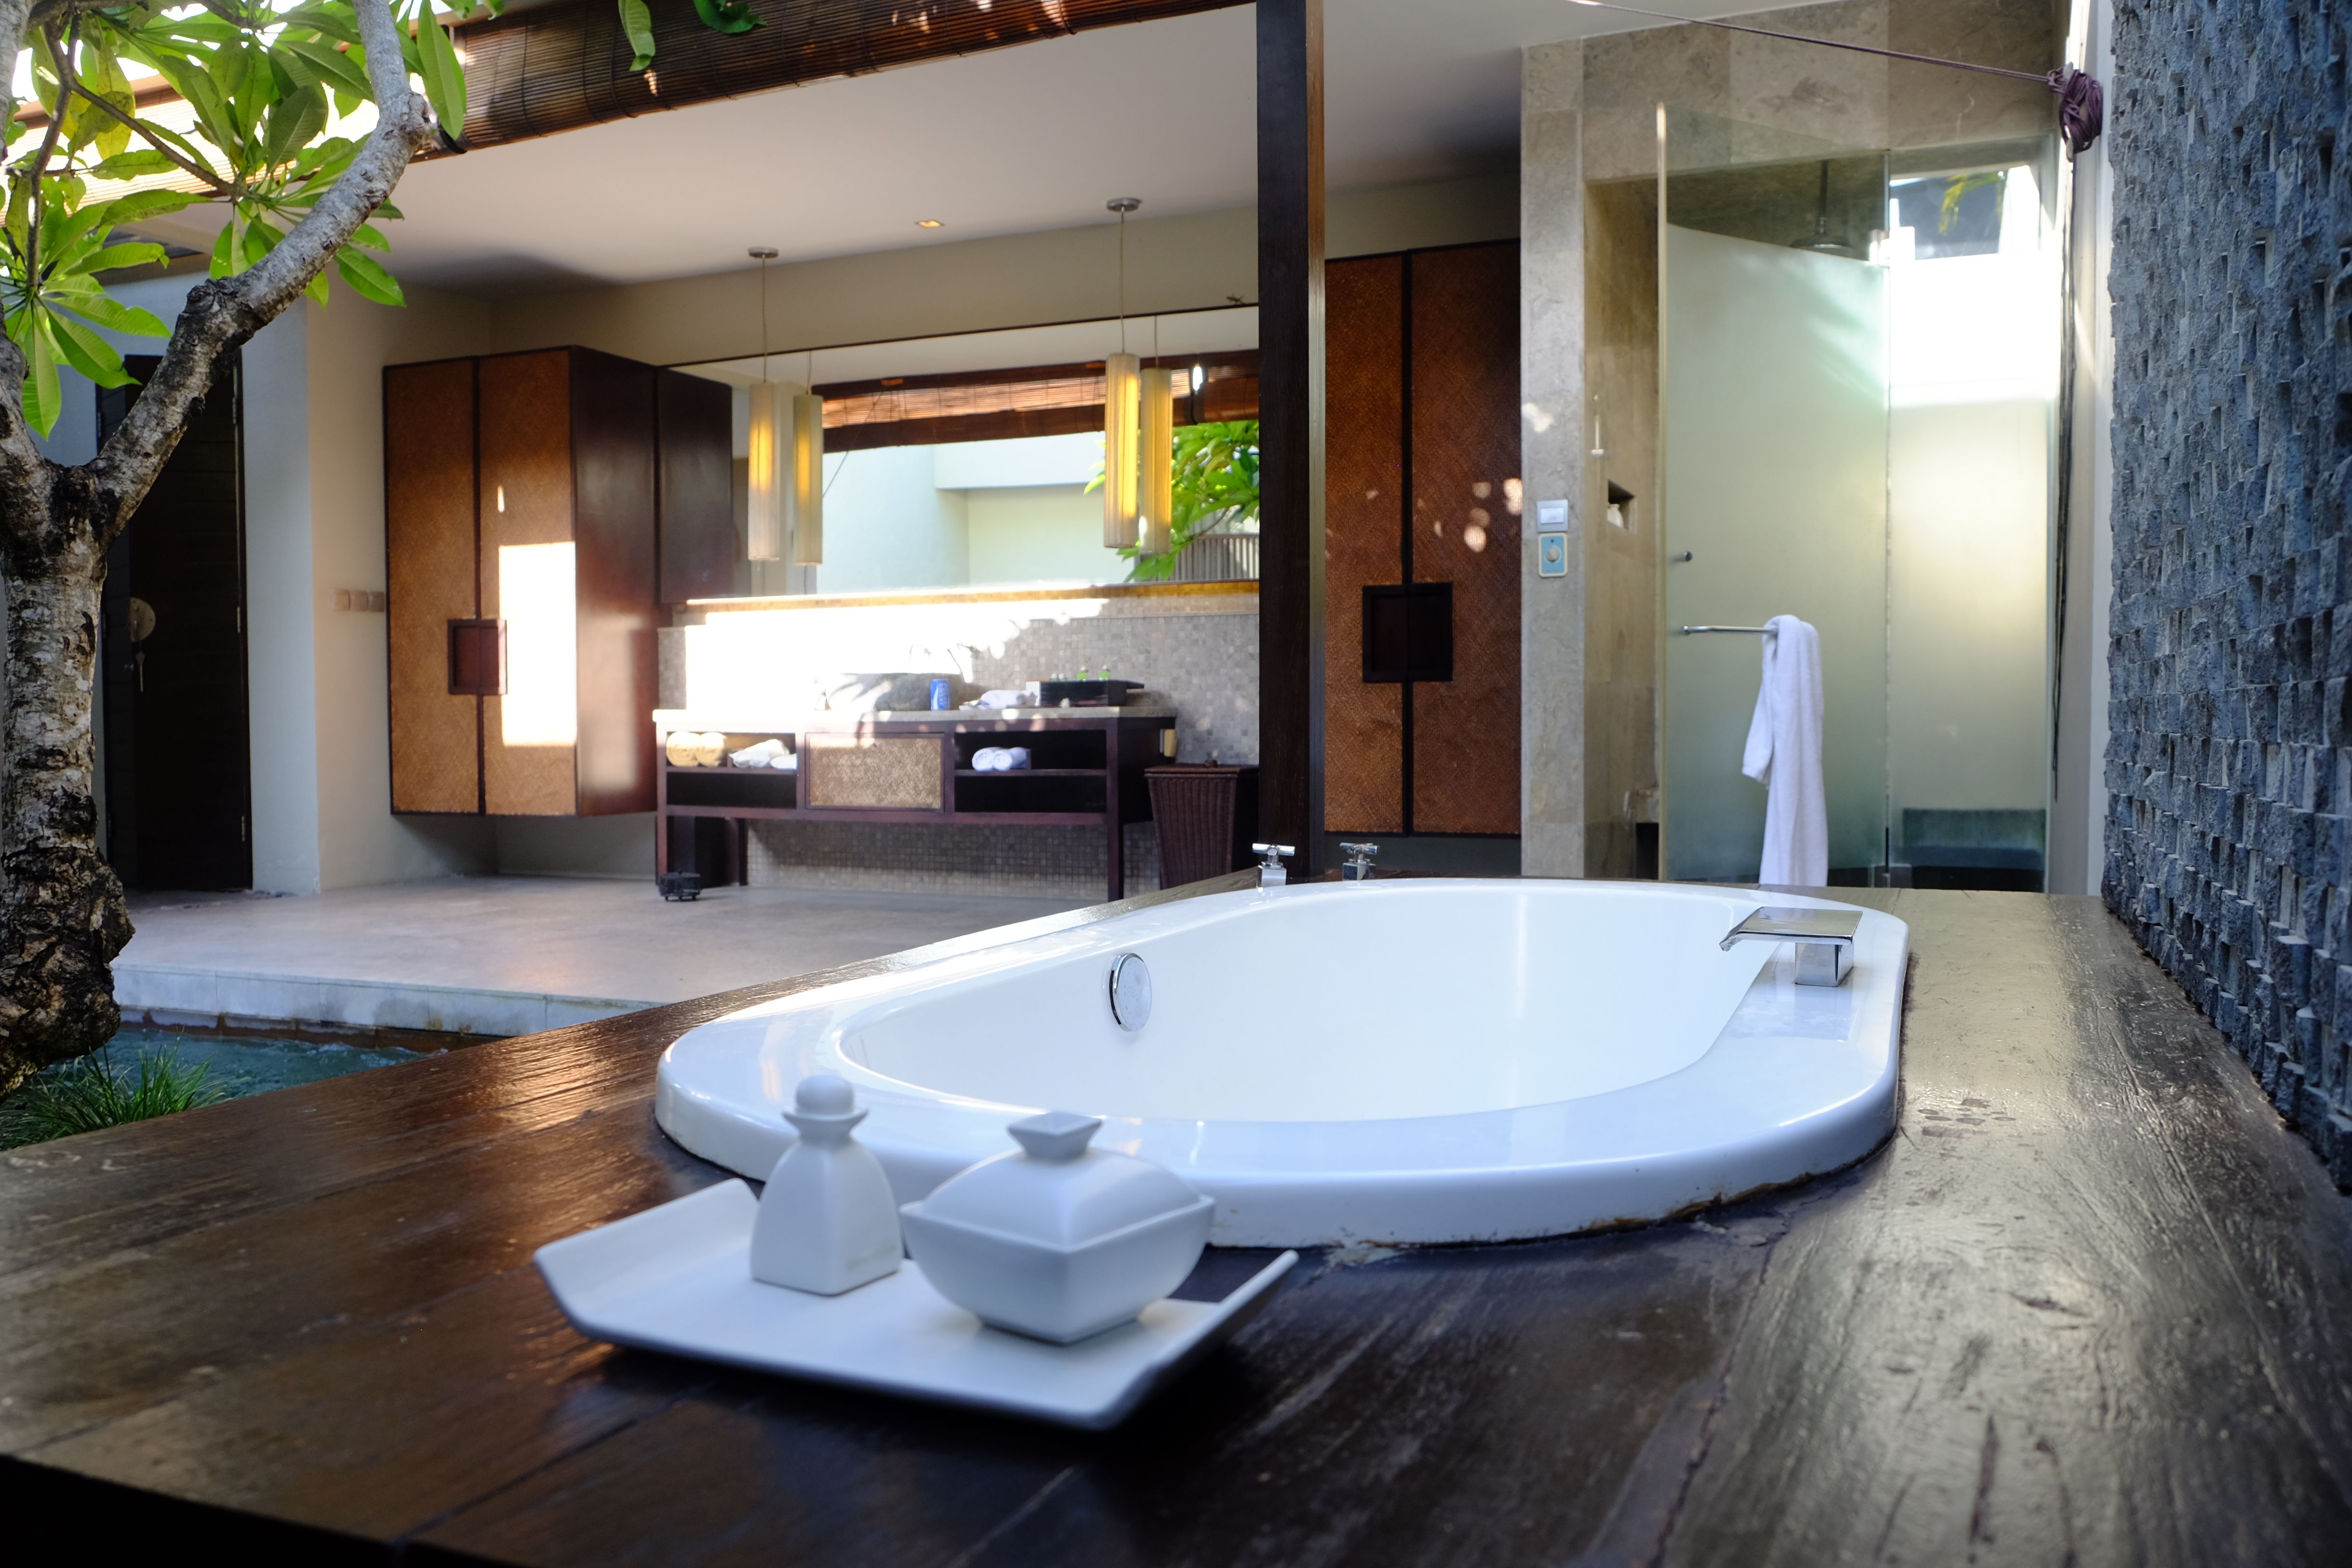 Photoshoot Real Estate Outdoor Bath Tub